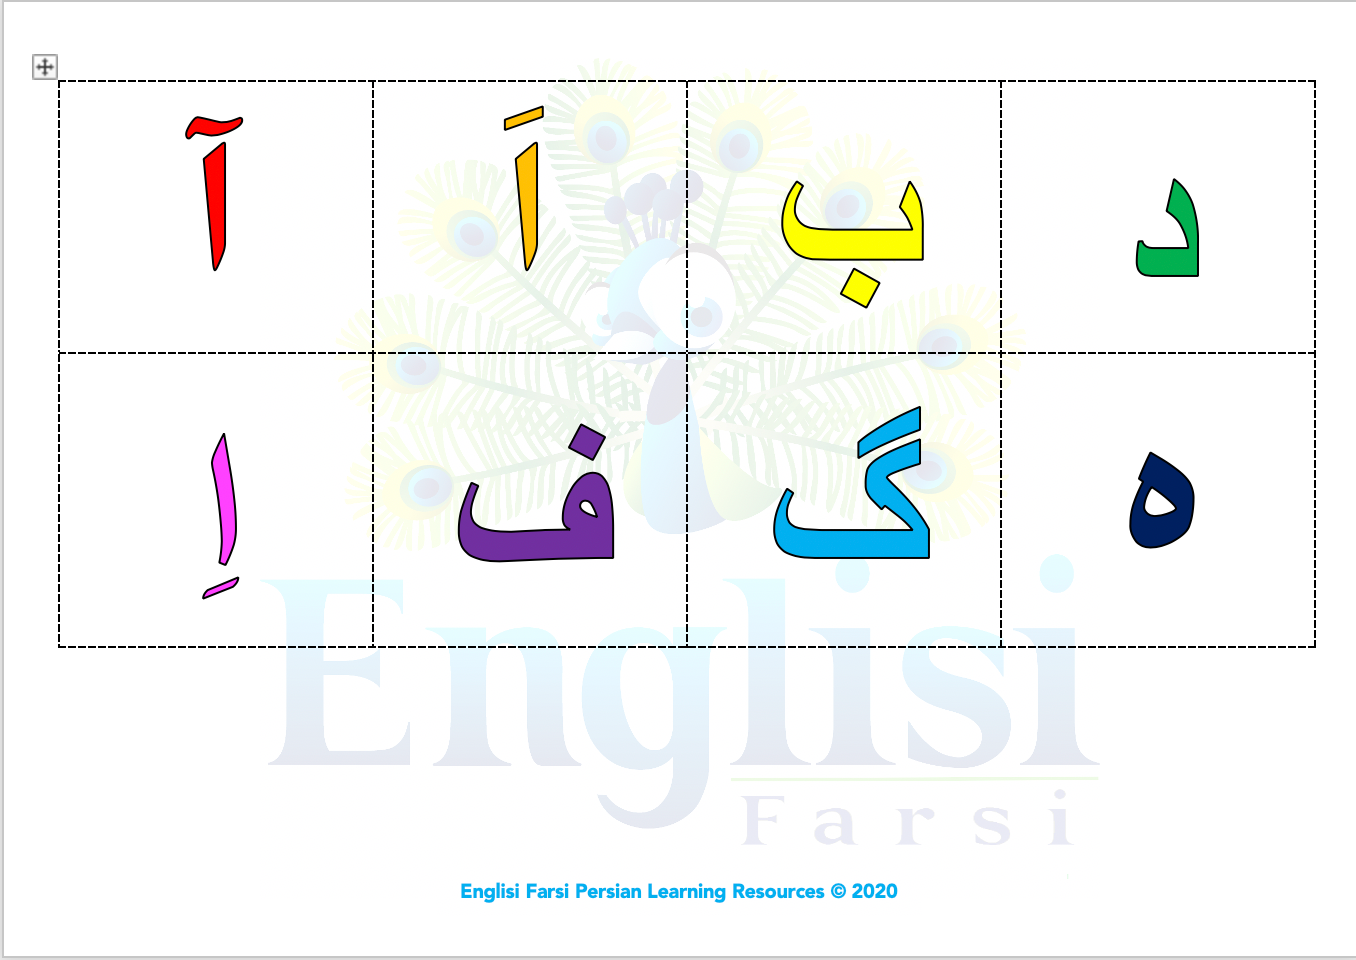 Western Armenian Alphabet Flash Cards DIGITAL (Instant Download) 